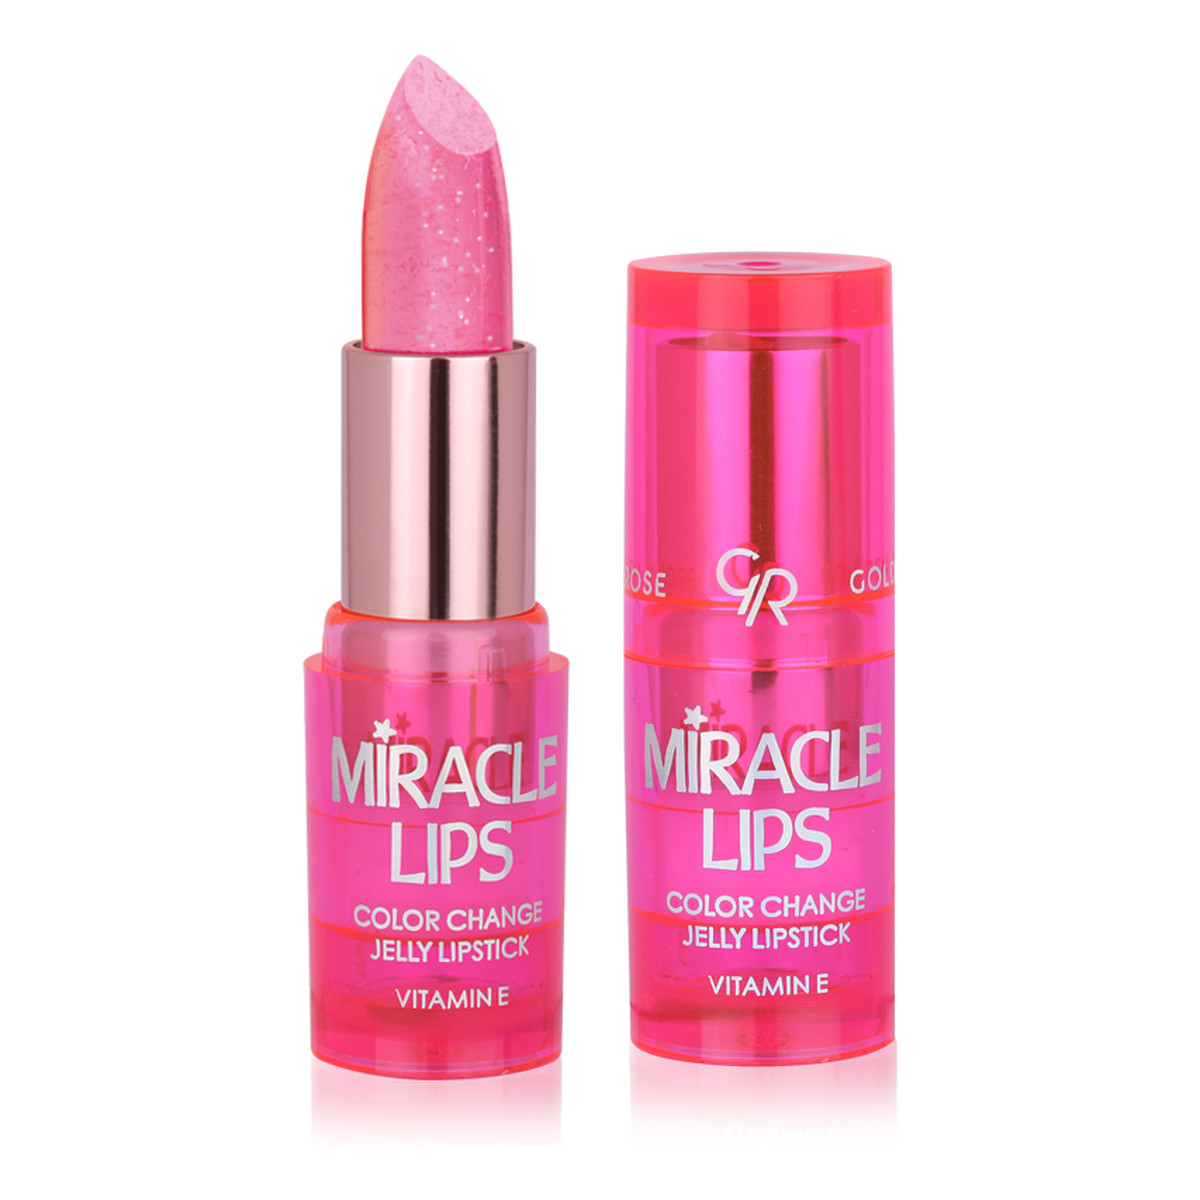 Golden Rose Miracle Lips Color Change Jelly Lipstick Żelowa pomadka do ust zmieniająca kolor 3.7g